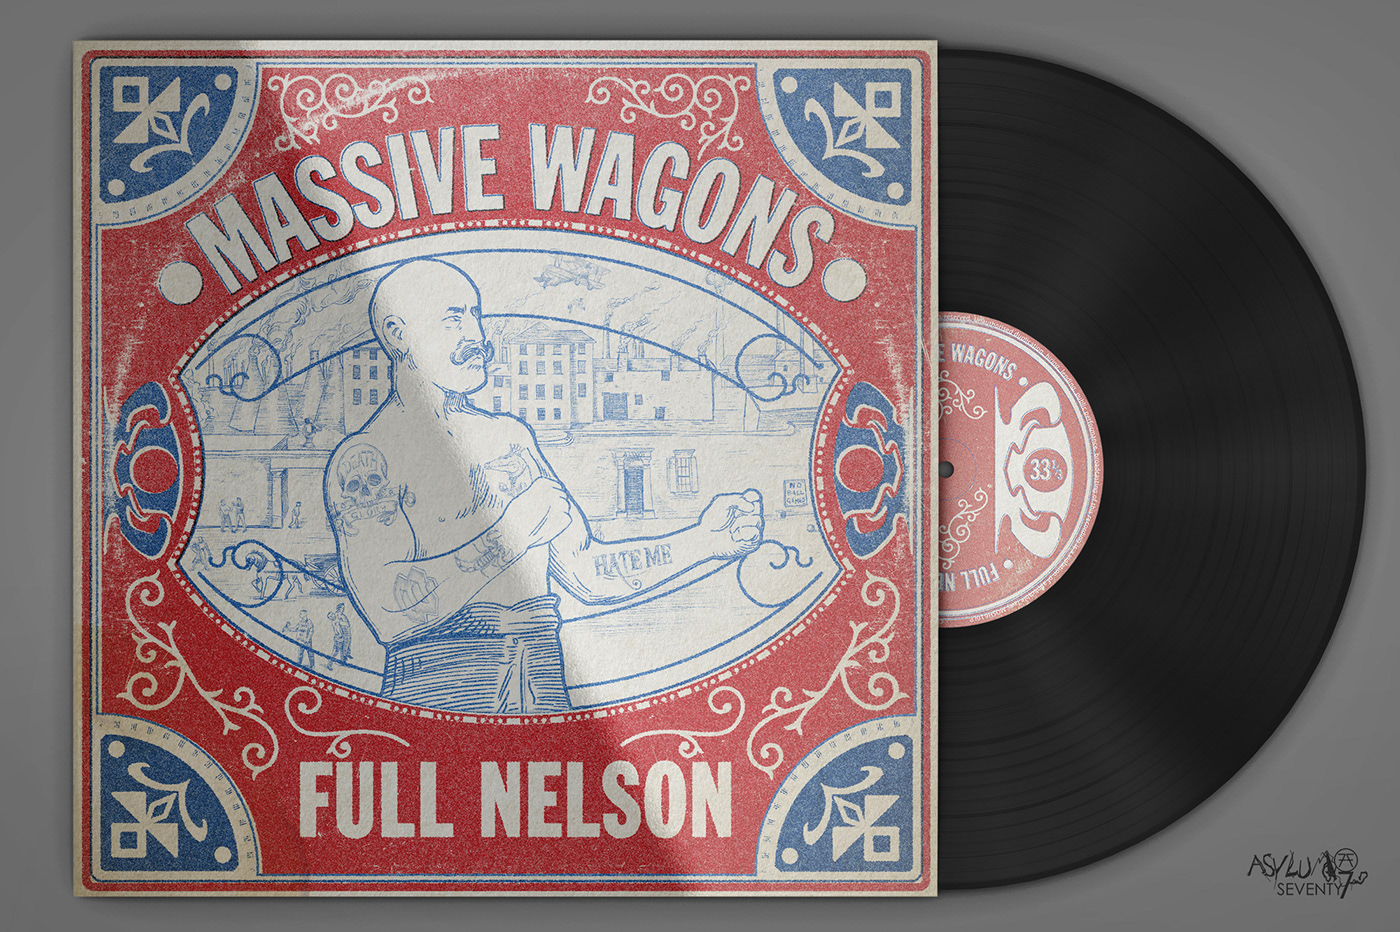 Bestuiven Schrijf op draad Massive Wagons - Full Nelson CD and LP artwork on Behance